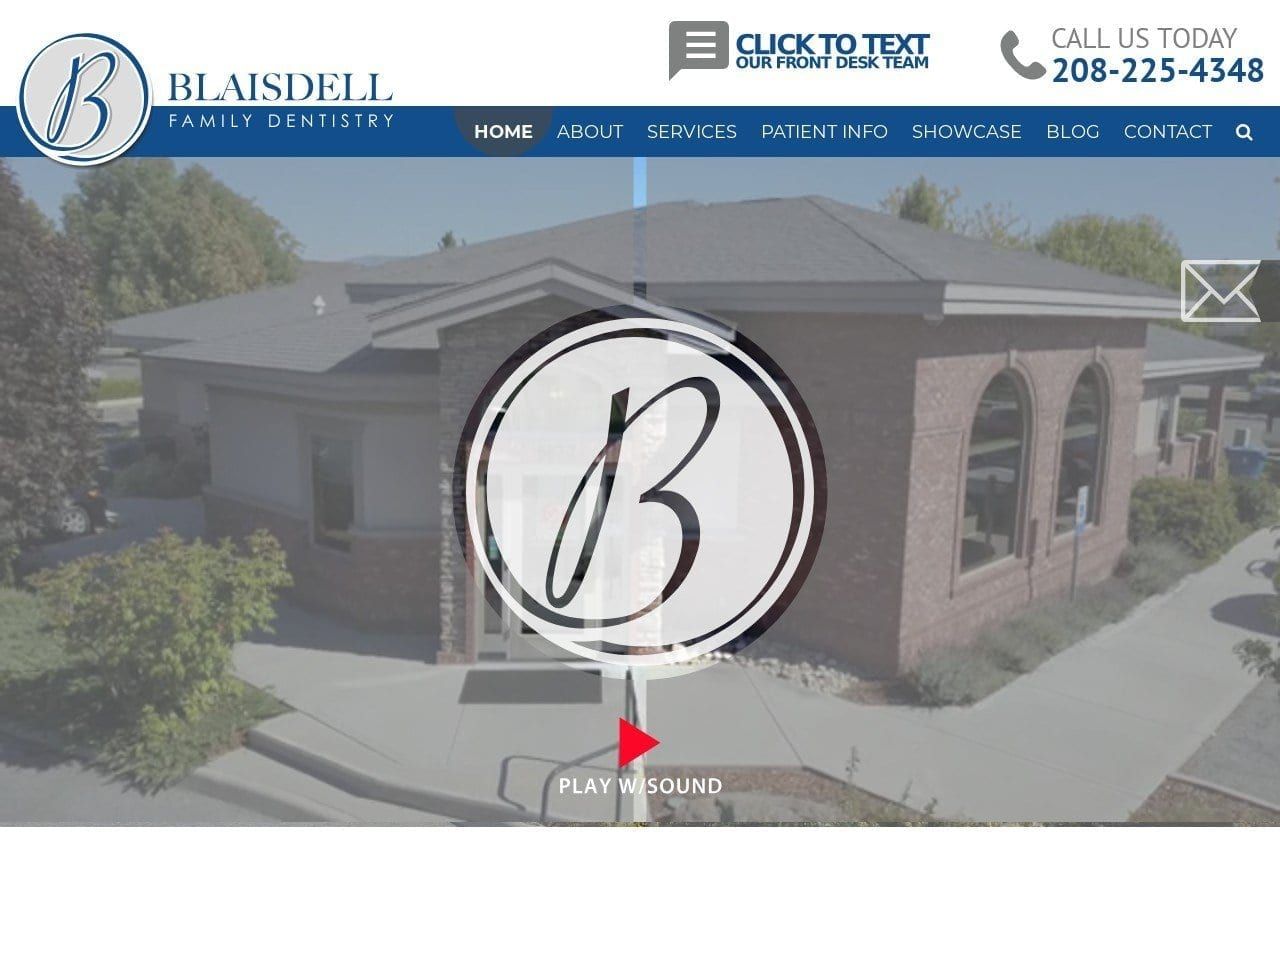 Blaisdell Family Dentistry Website Screenshot from blaisdellfamilydentistry.com